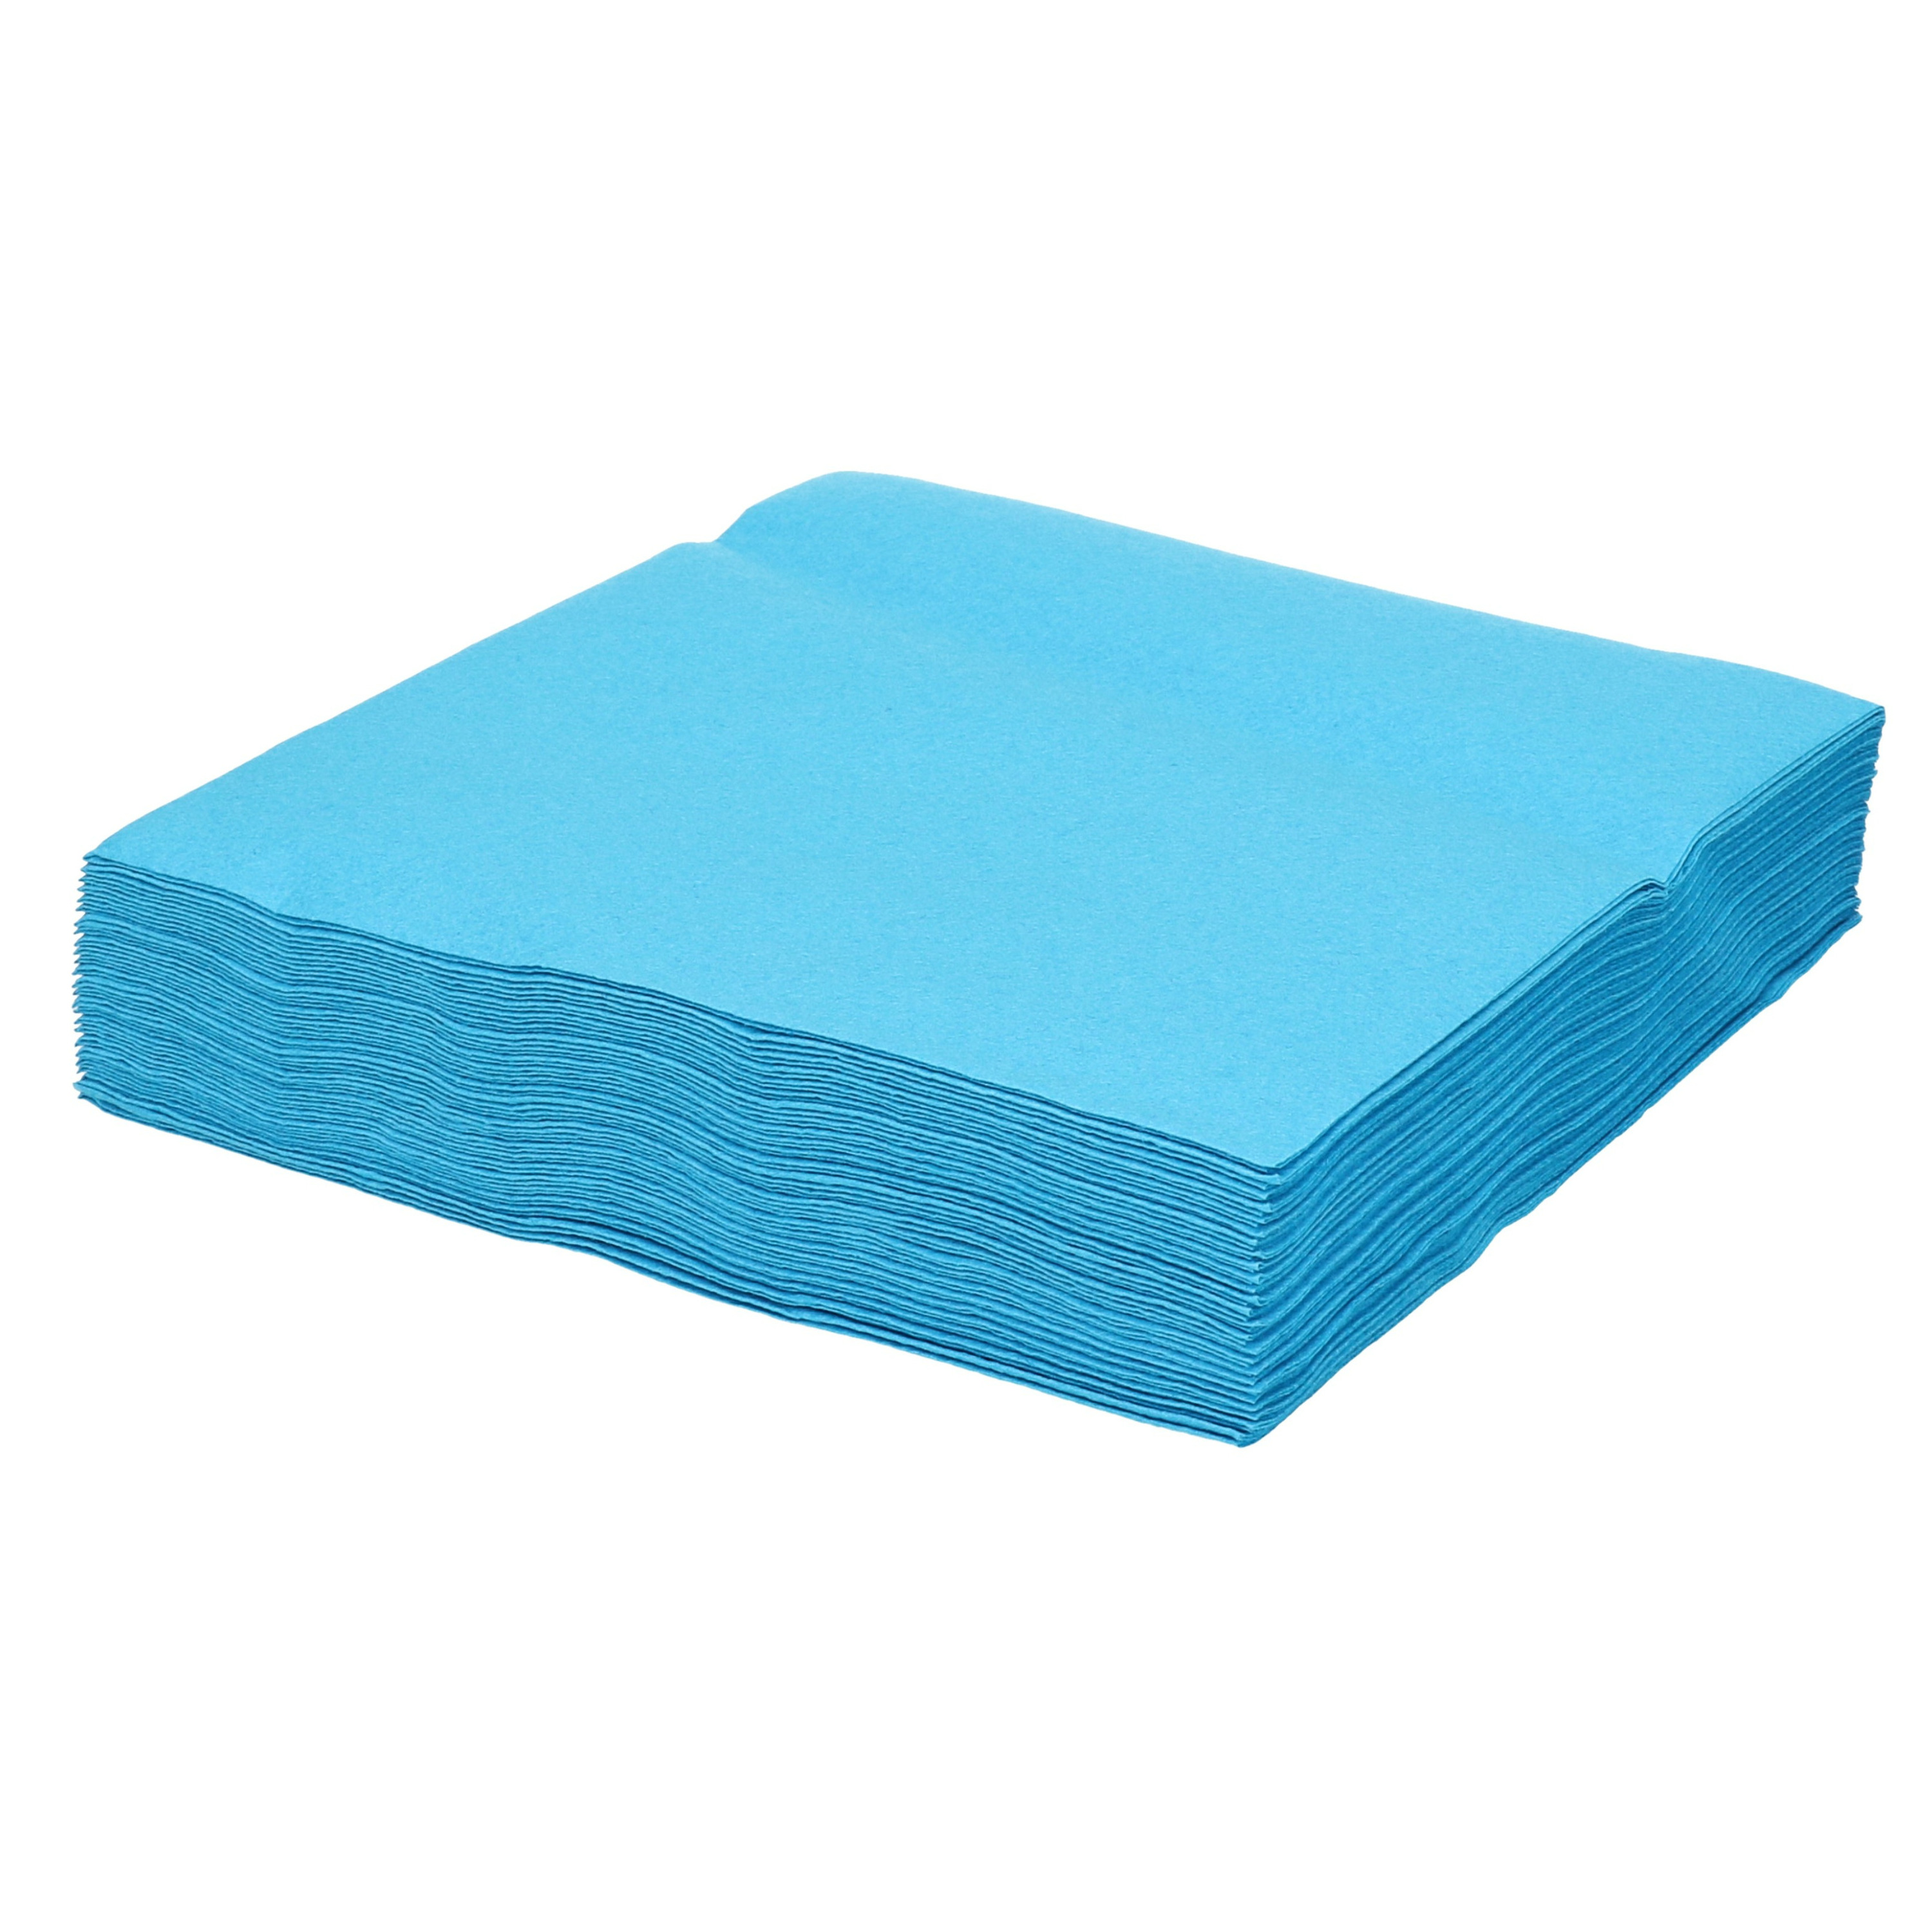 25x stuks feest servetten aqua blauw 40 x 40 cm papier